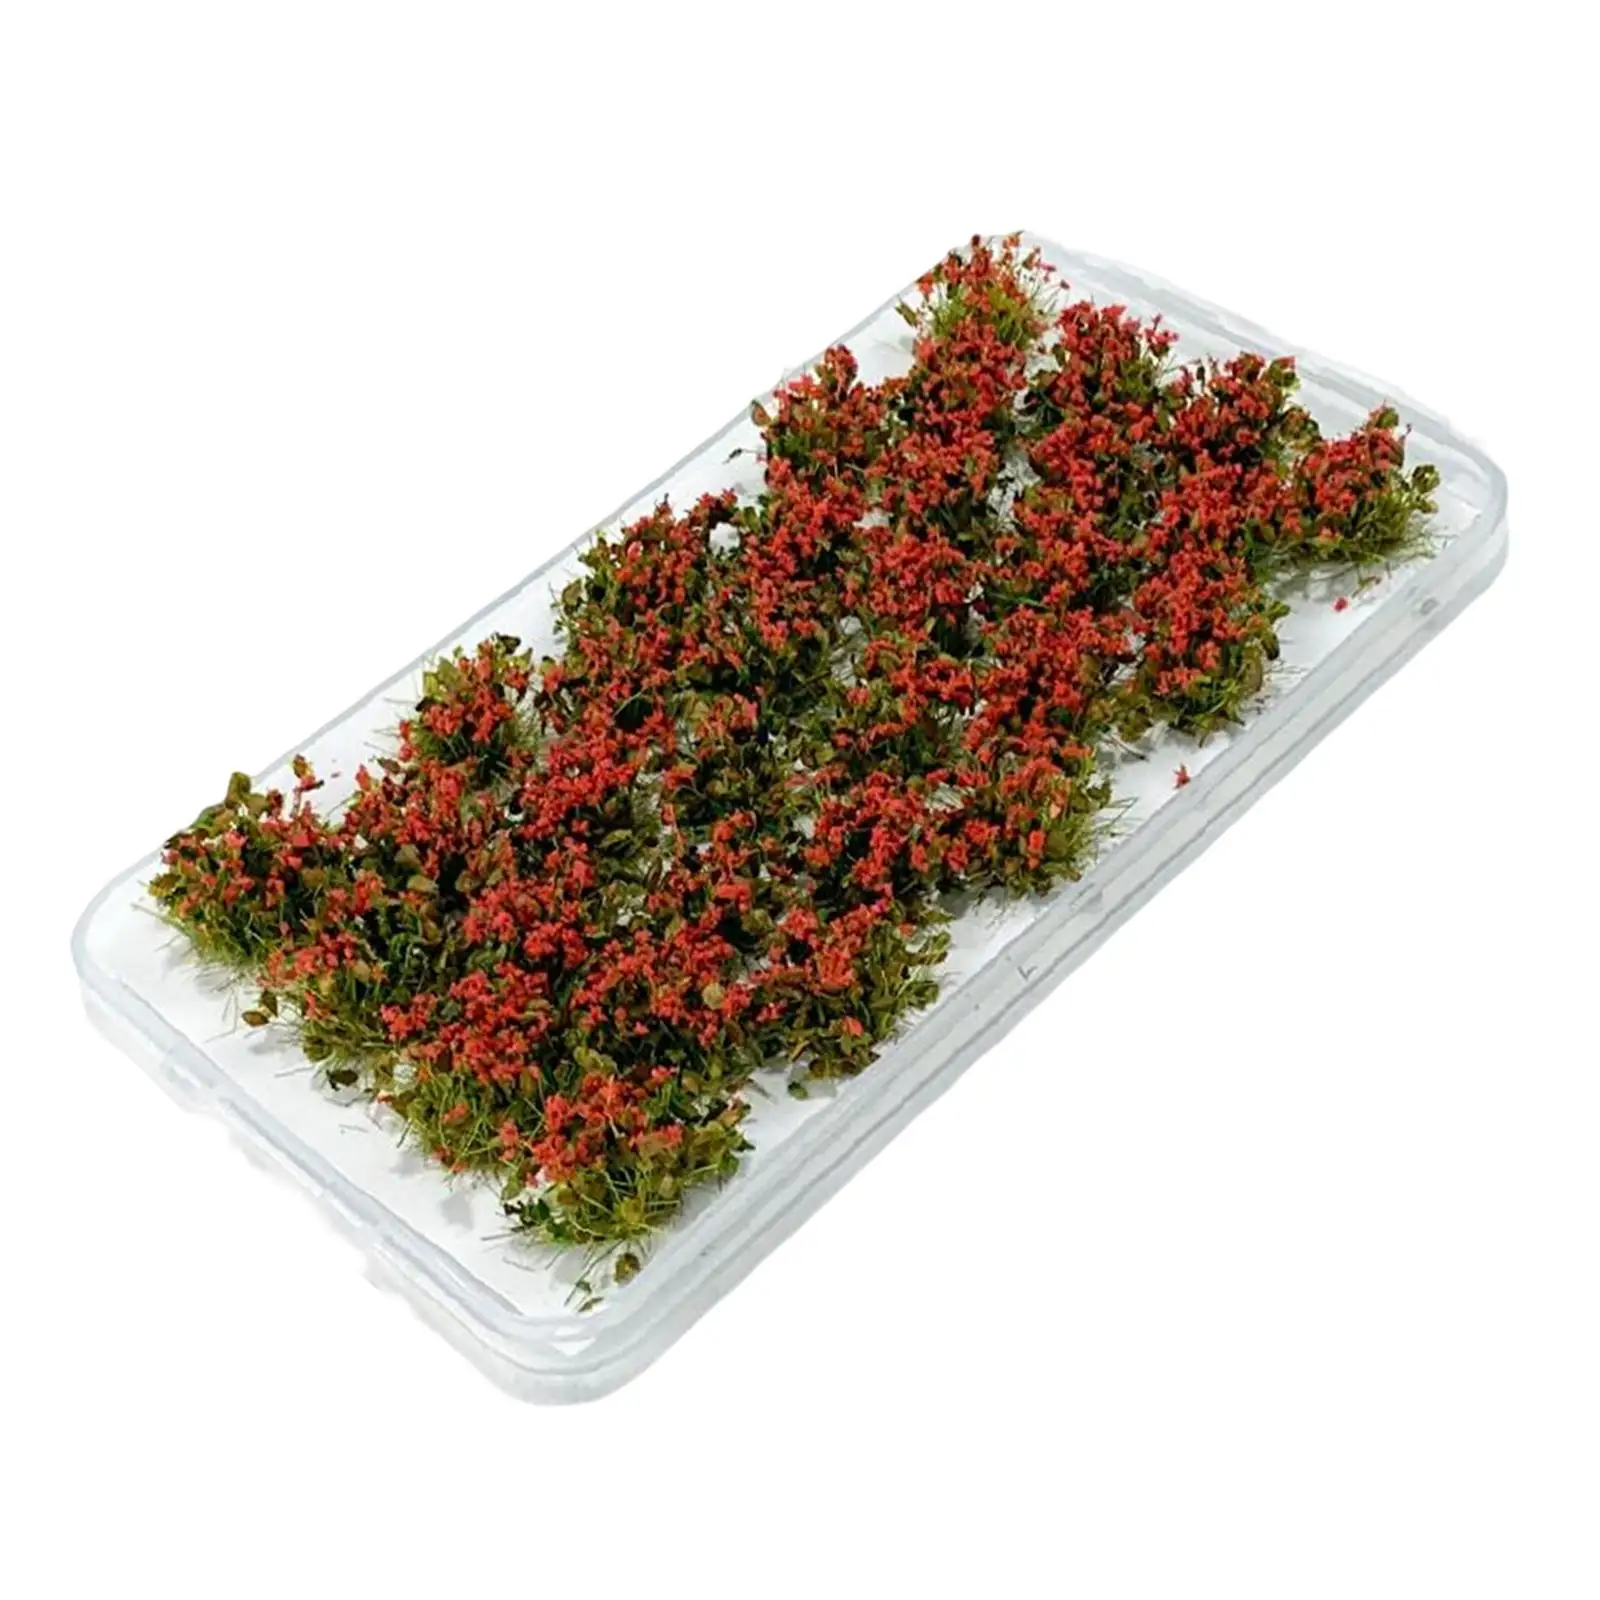 32Pcs Micro Landscape Miniature Flower Bushes Flower Cluster for Railroad Scenery Architecture Building Model